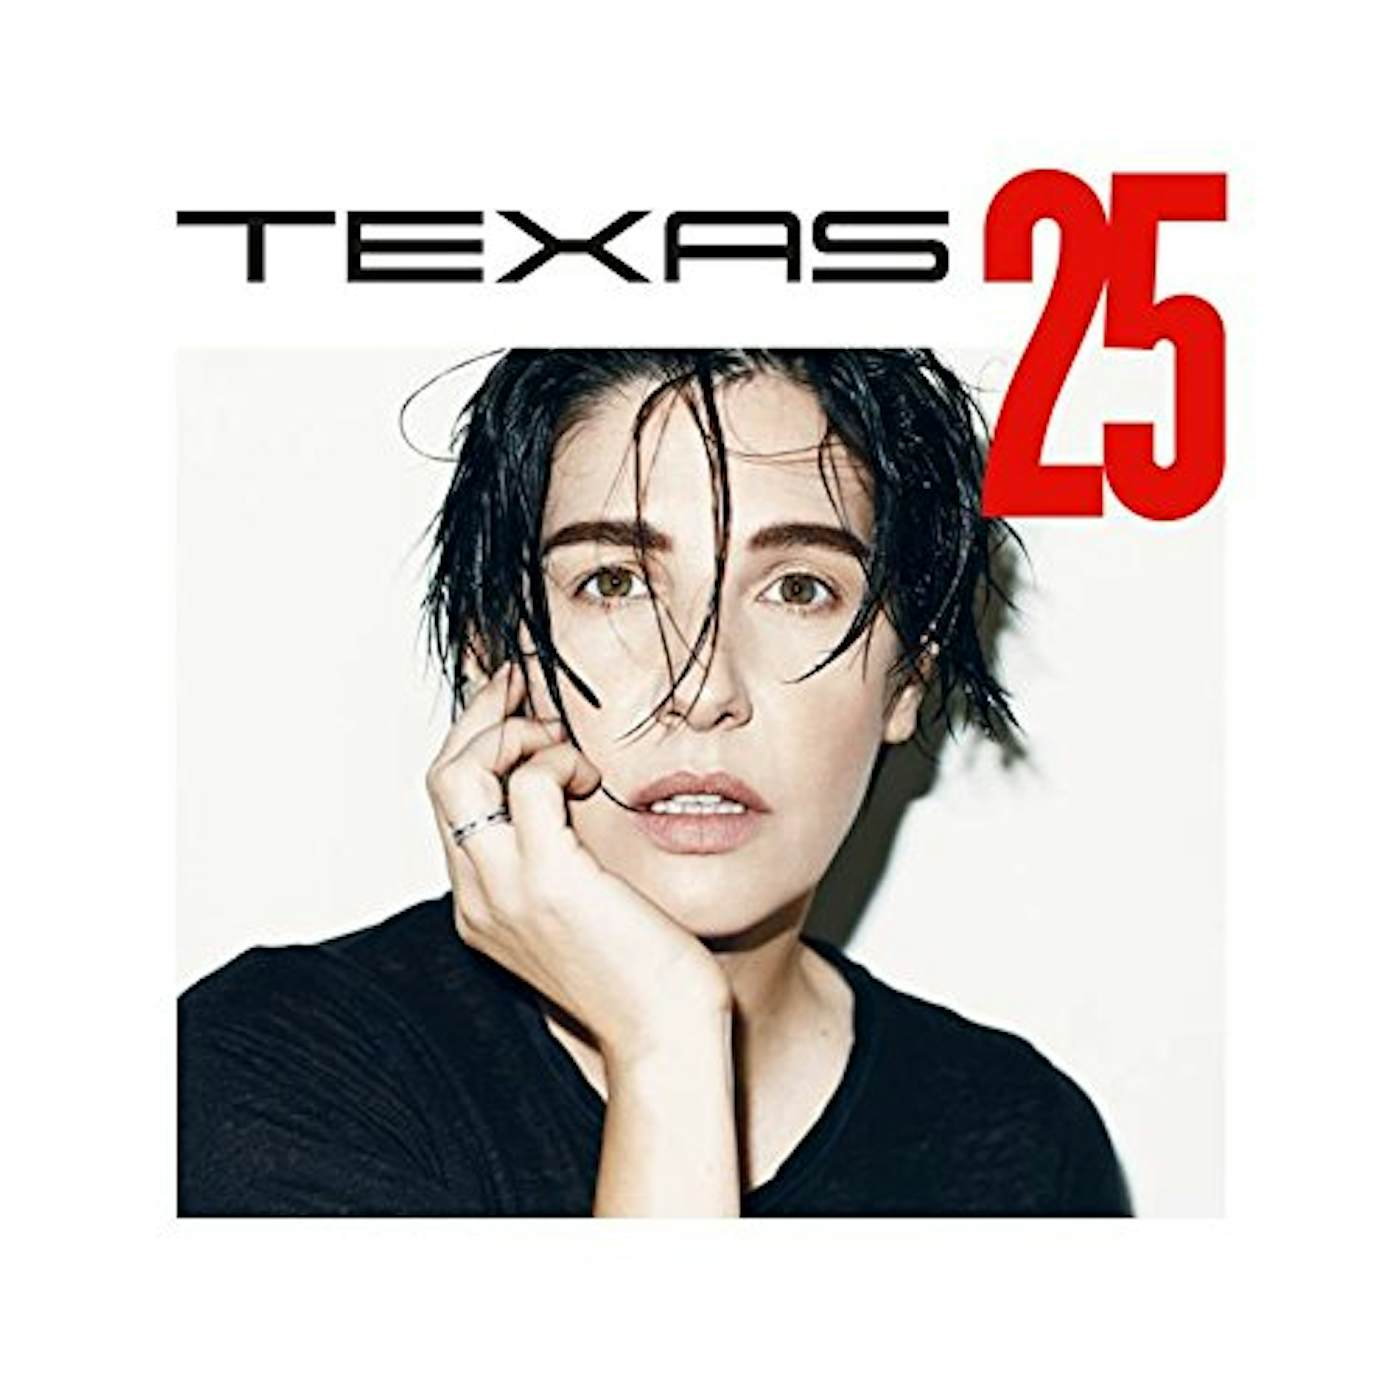 Texas 25 Vinyl Record